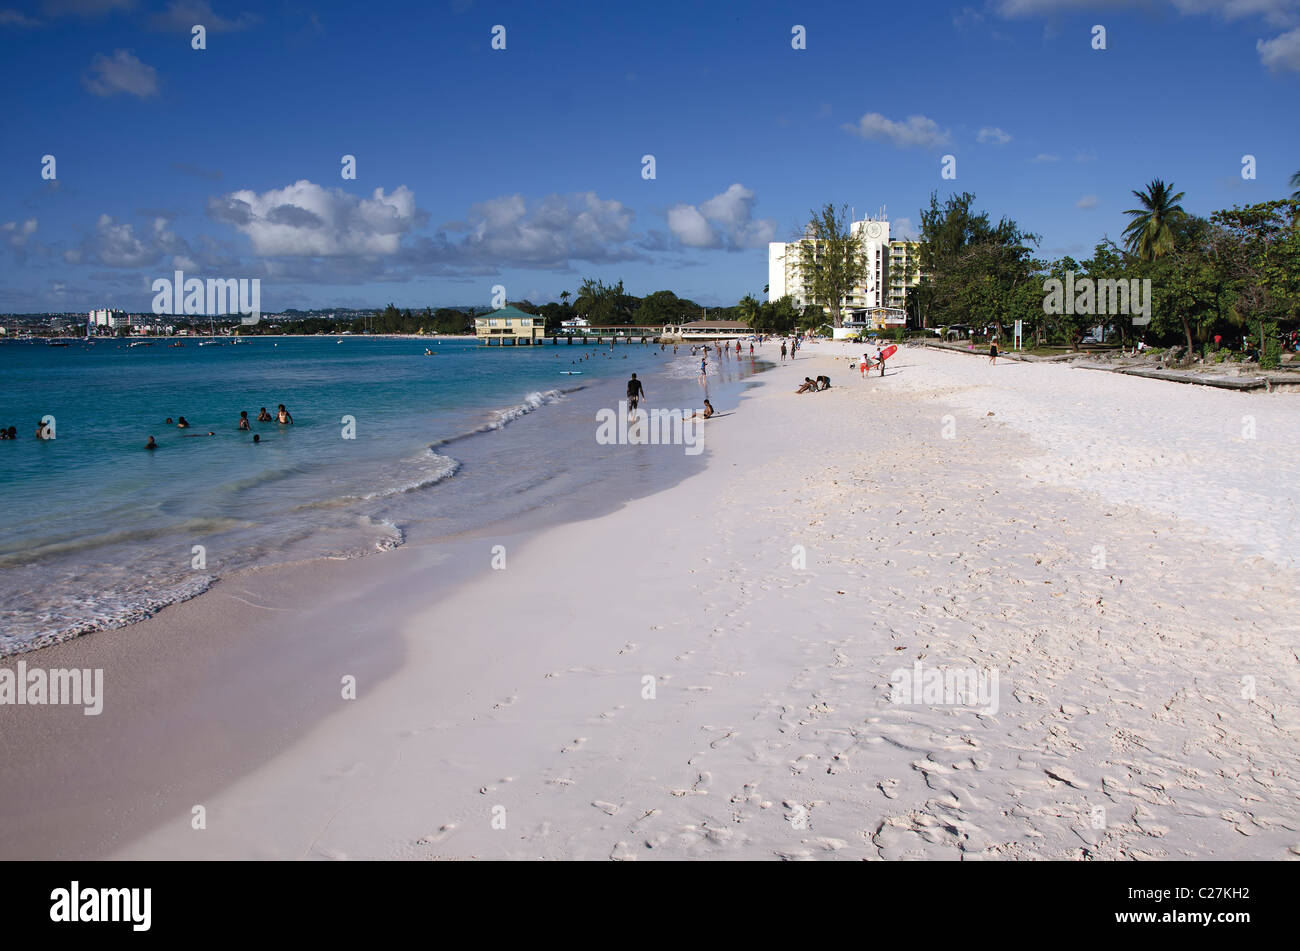 Plage de galets, Needham's Point, la Barbade Banque D'Images